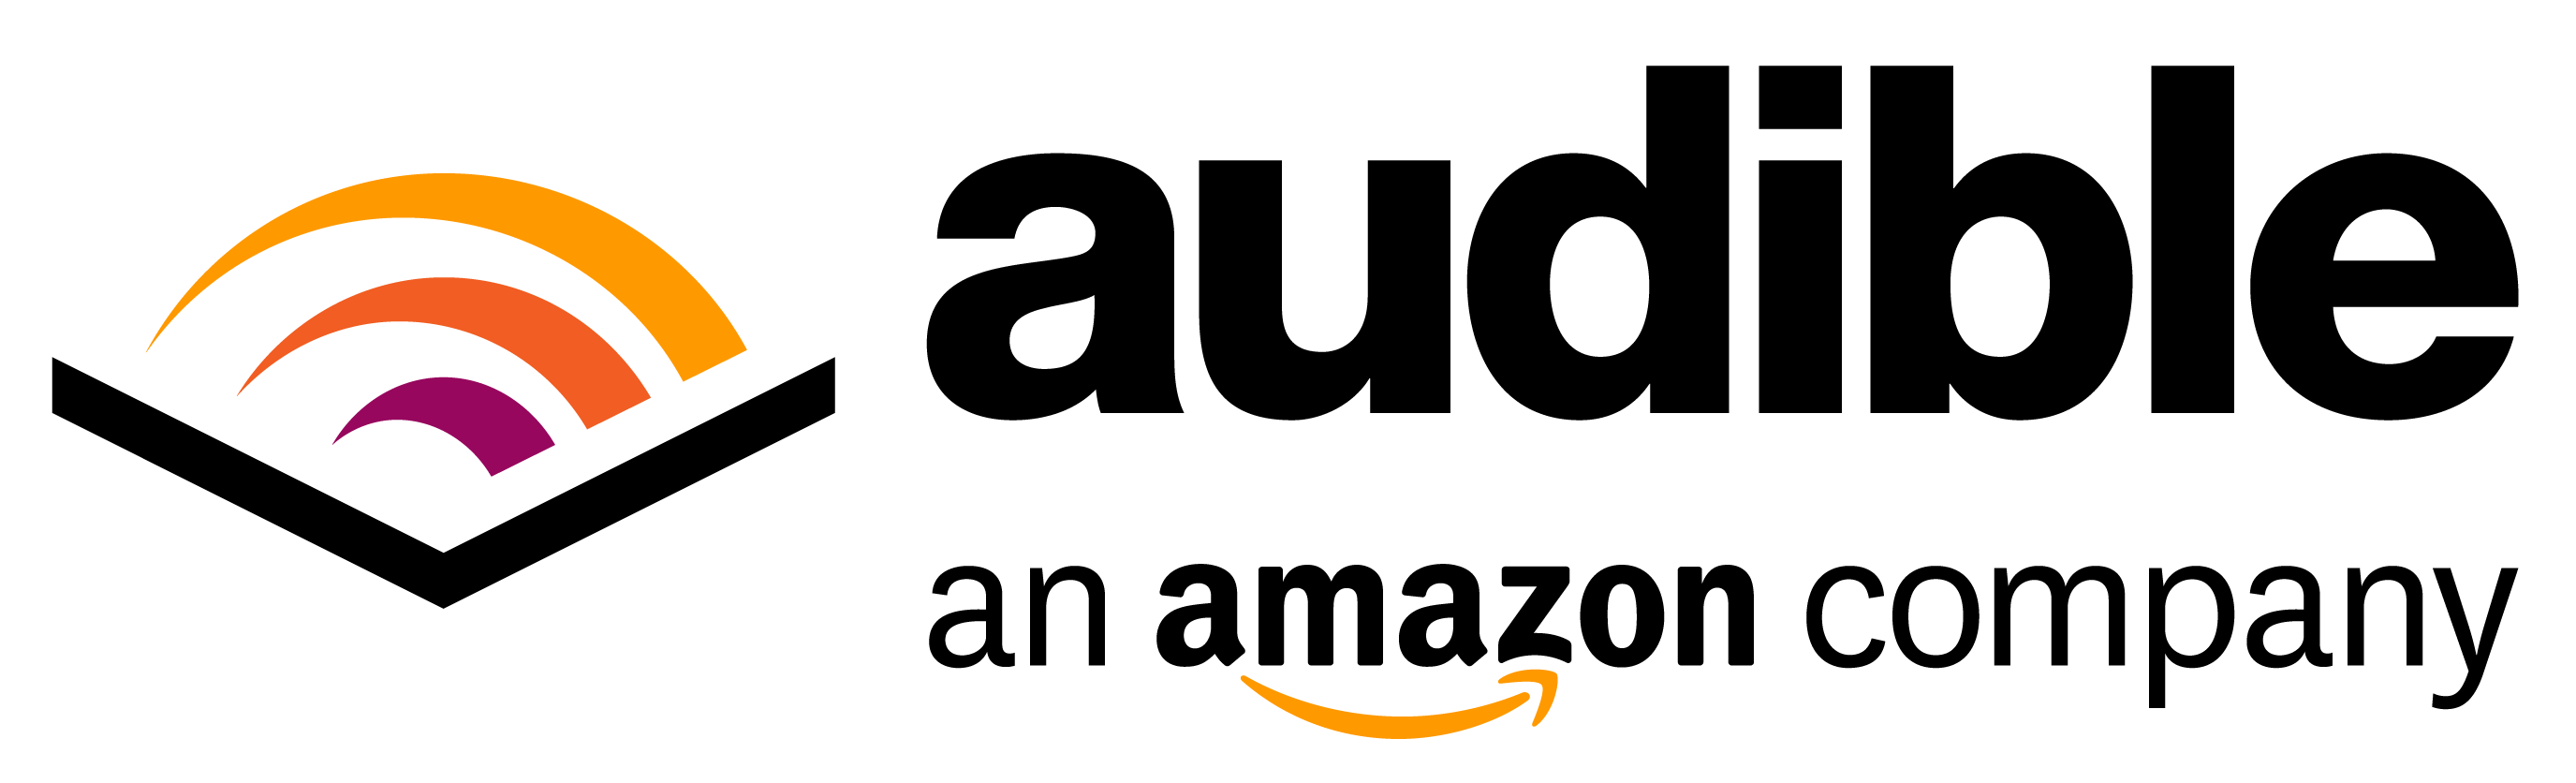 audible-logo-white1